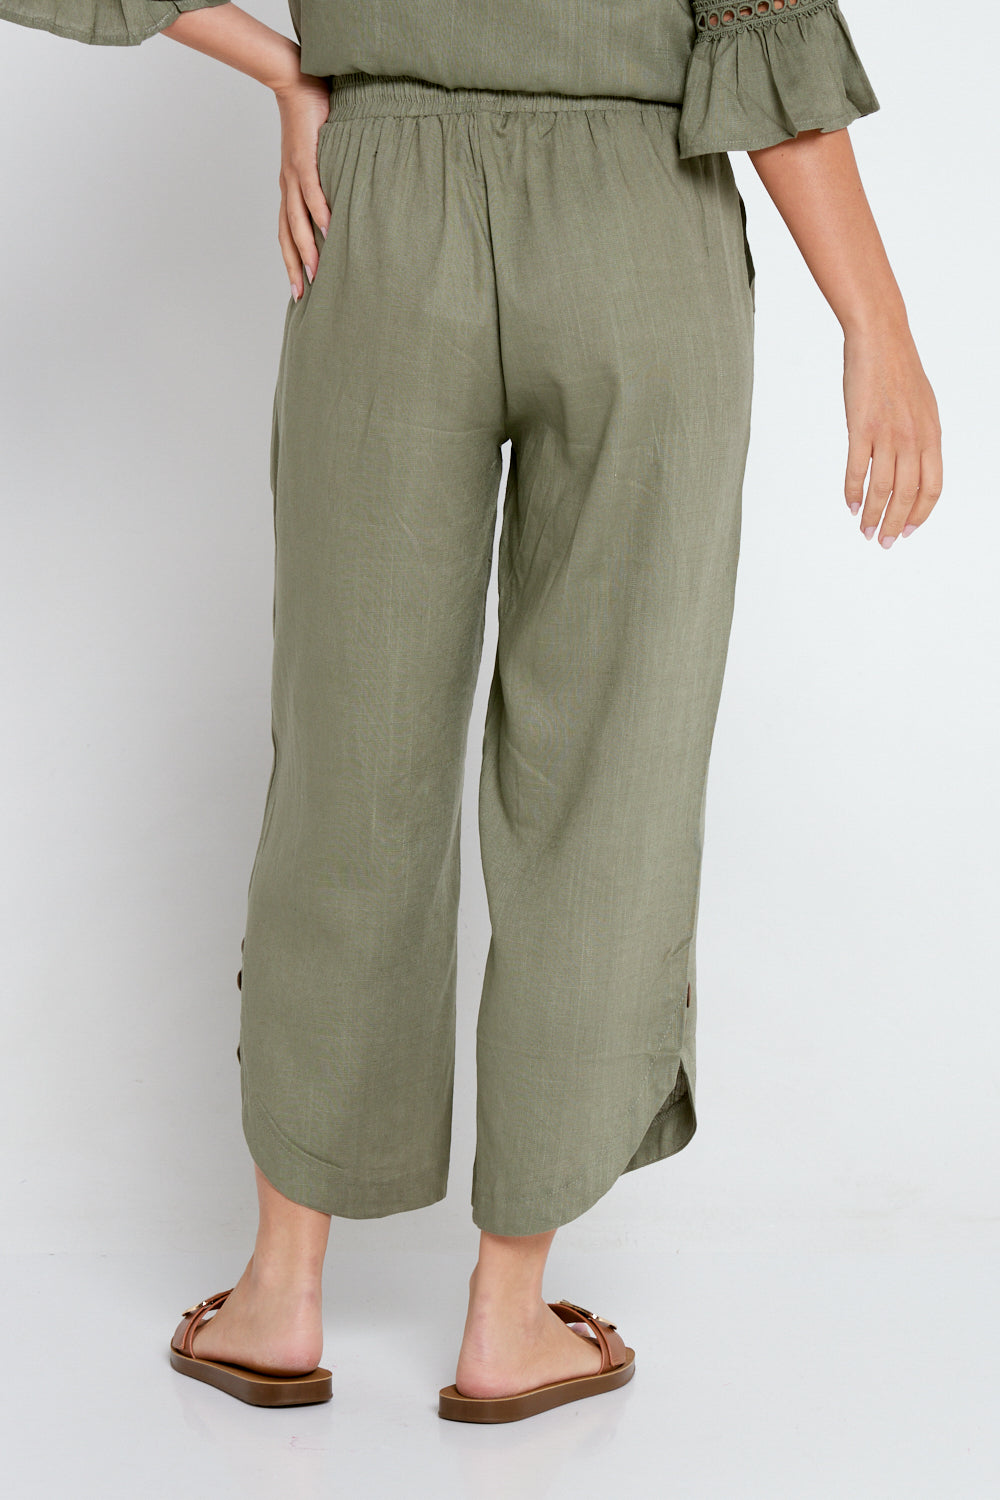 Cartia Linen Pants - Khaki